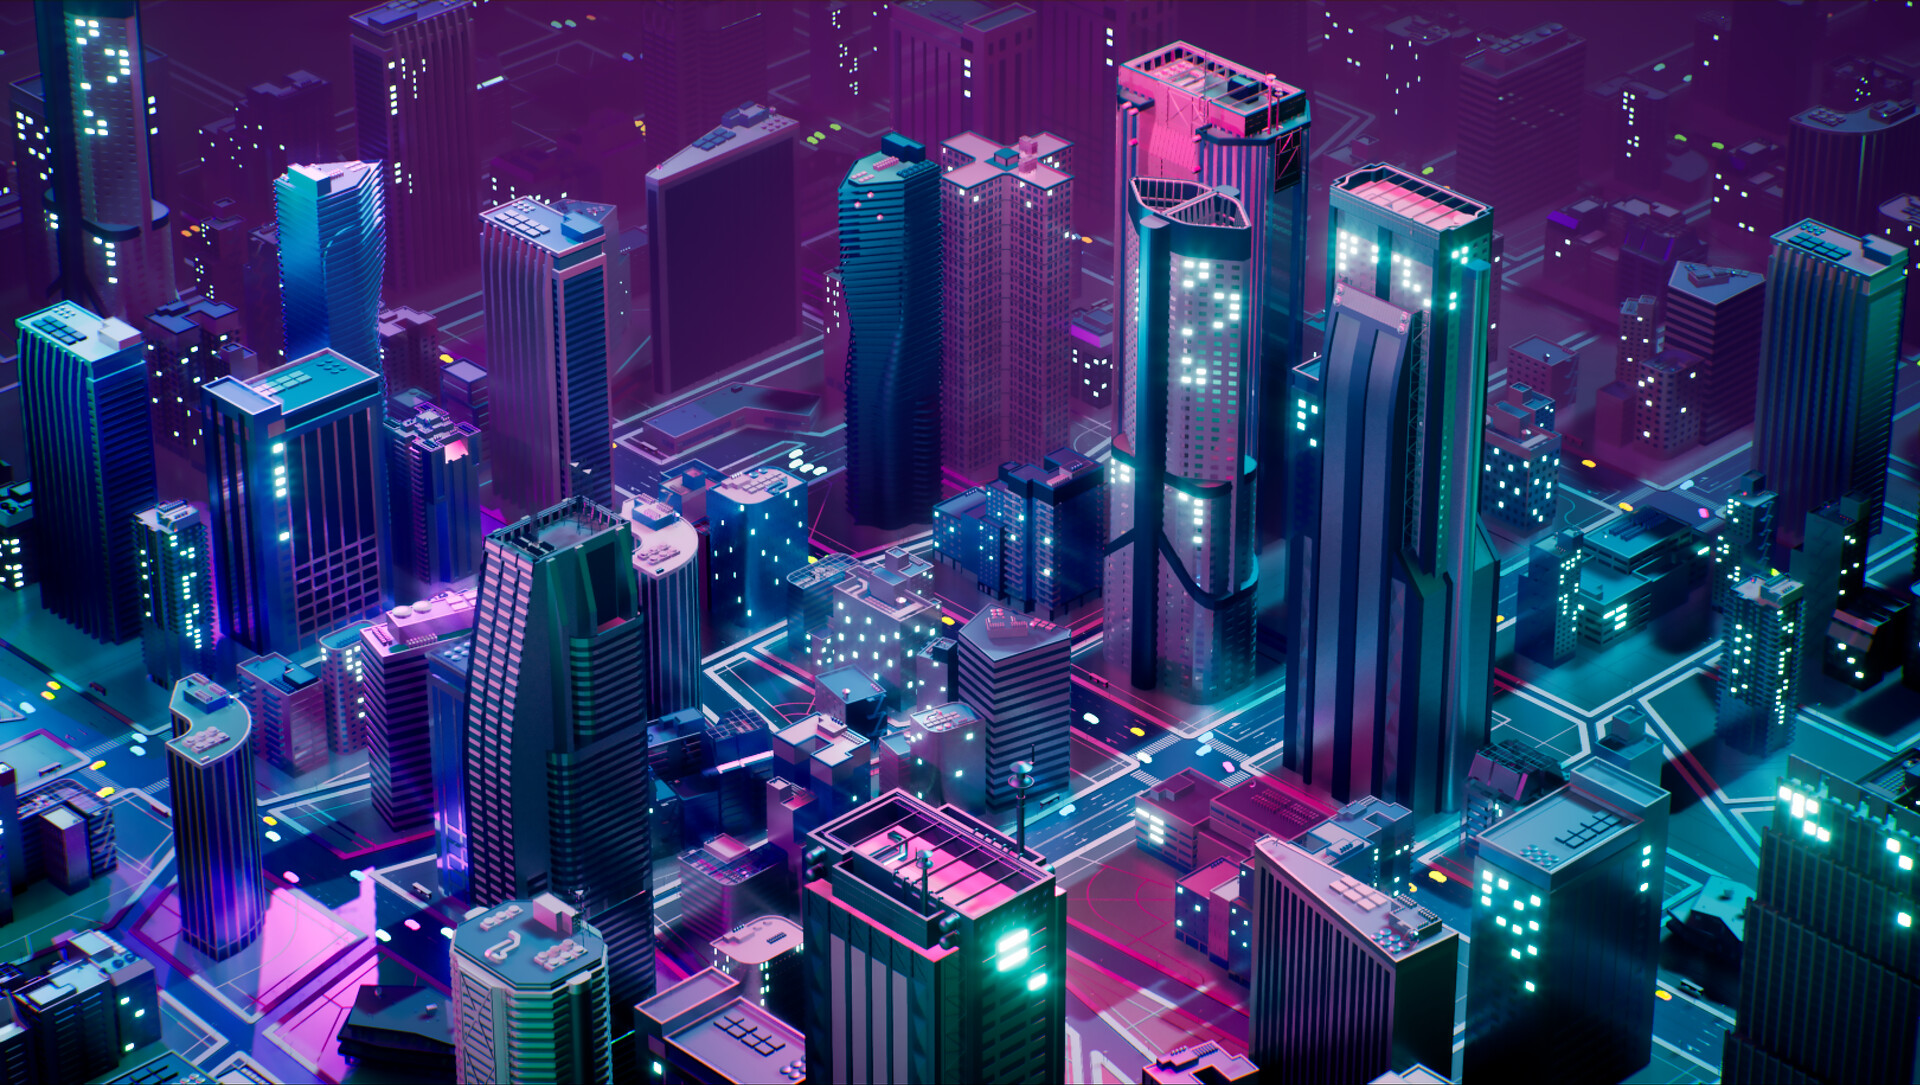 ArtStation - Neon City - Unreal Engine 4